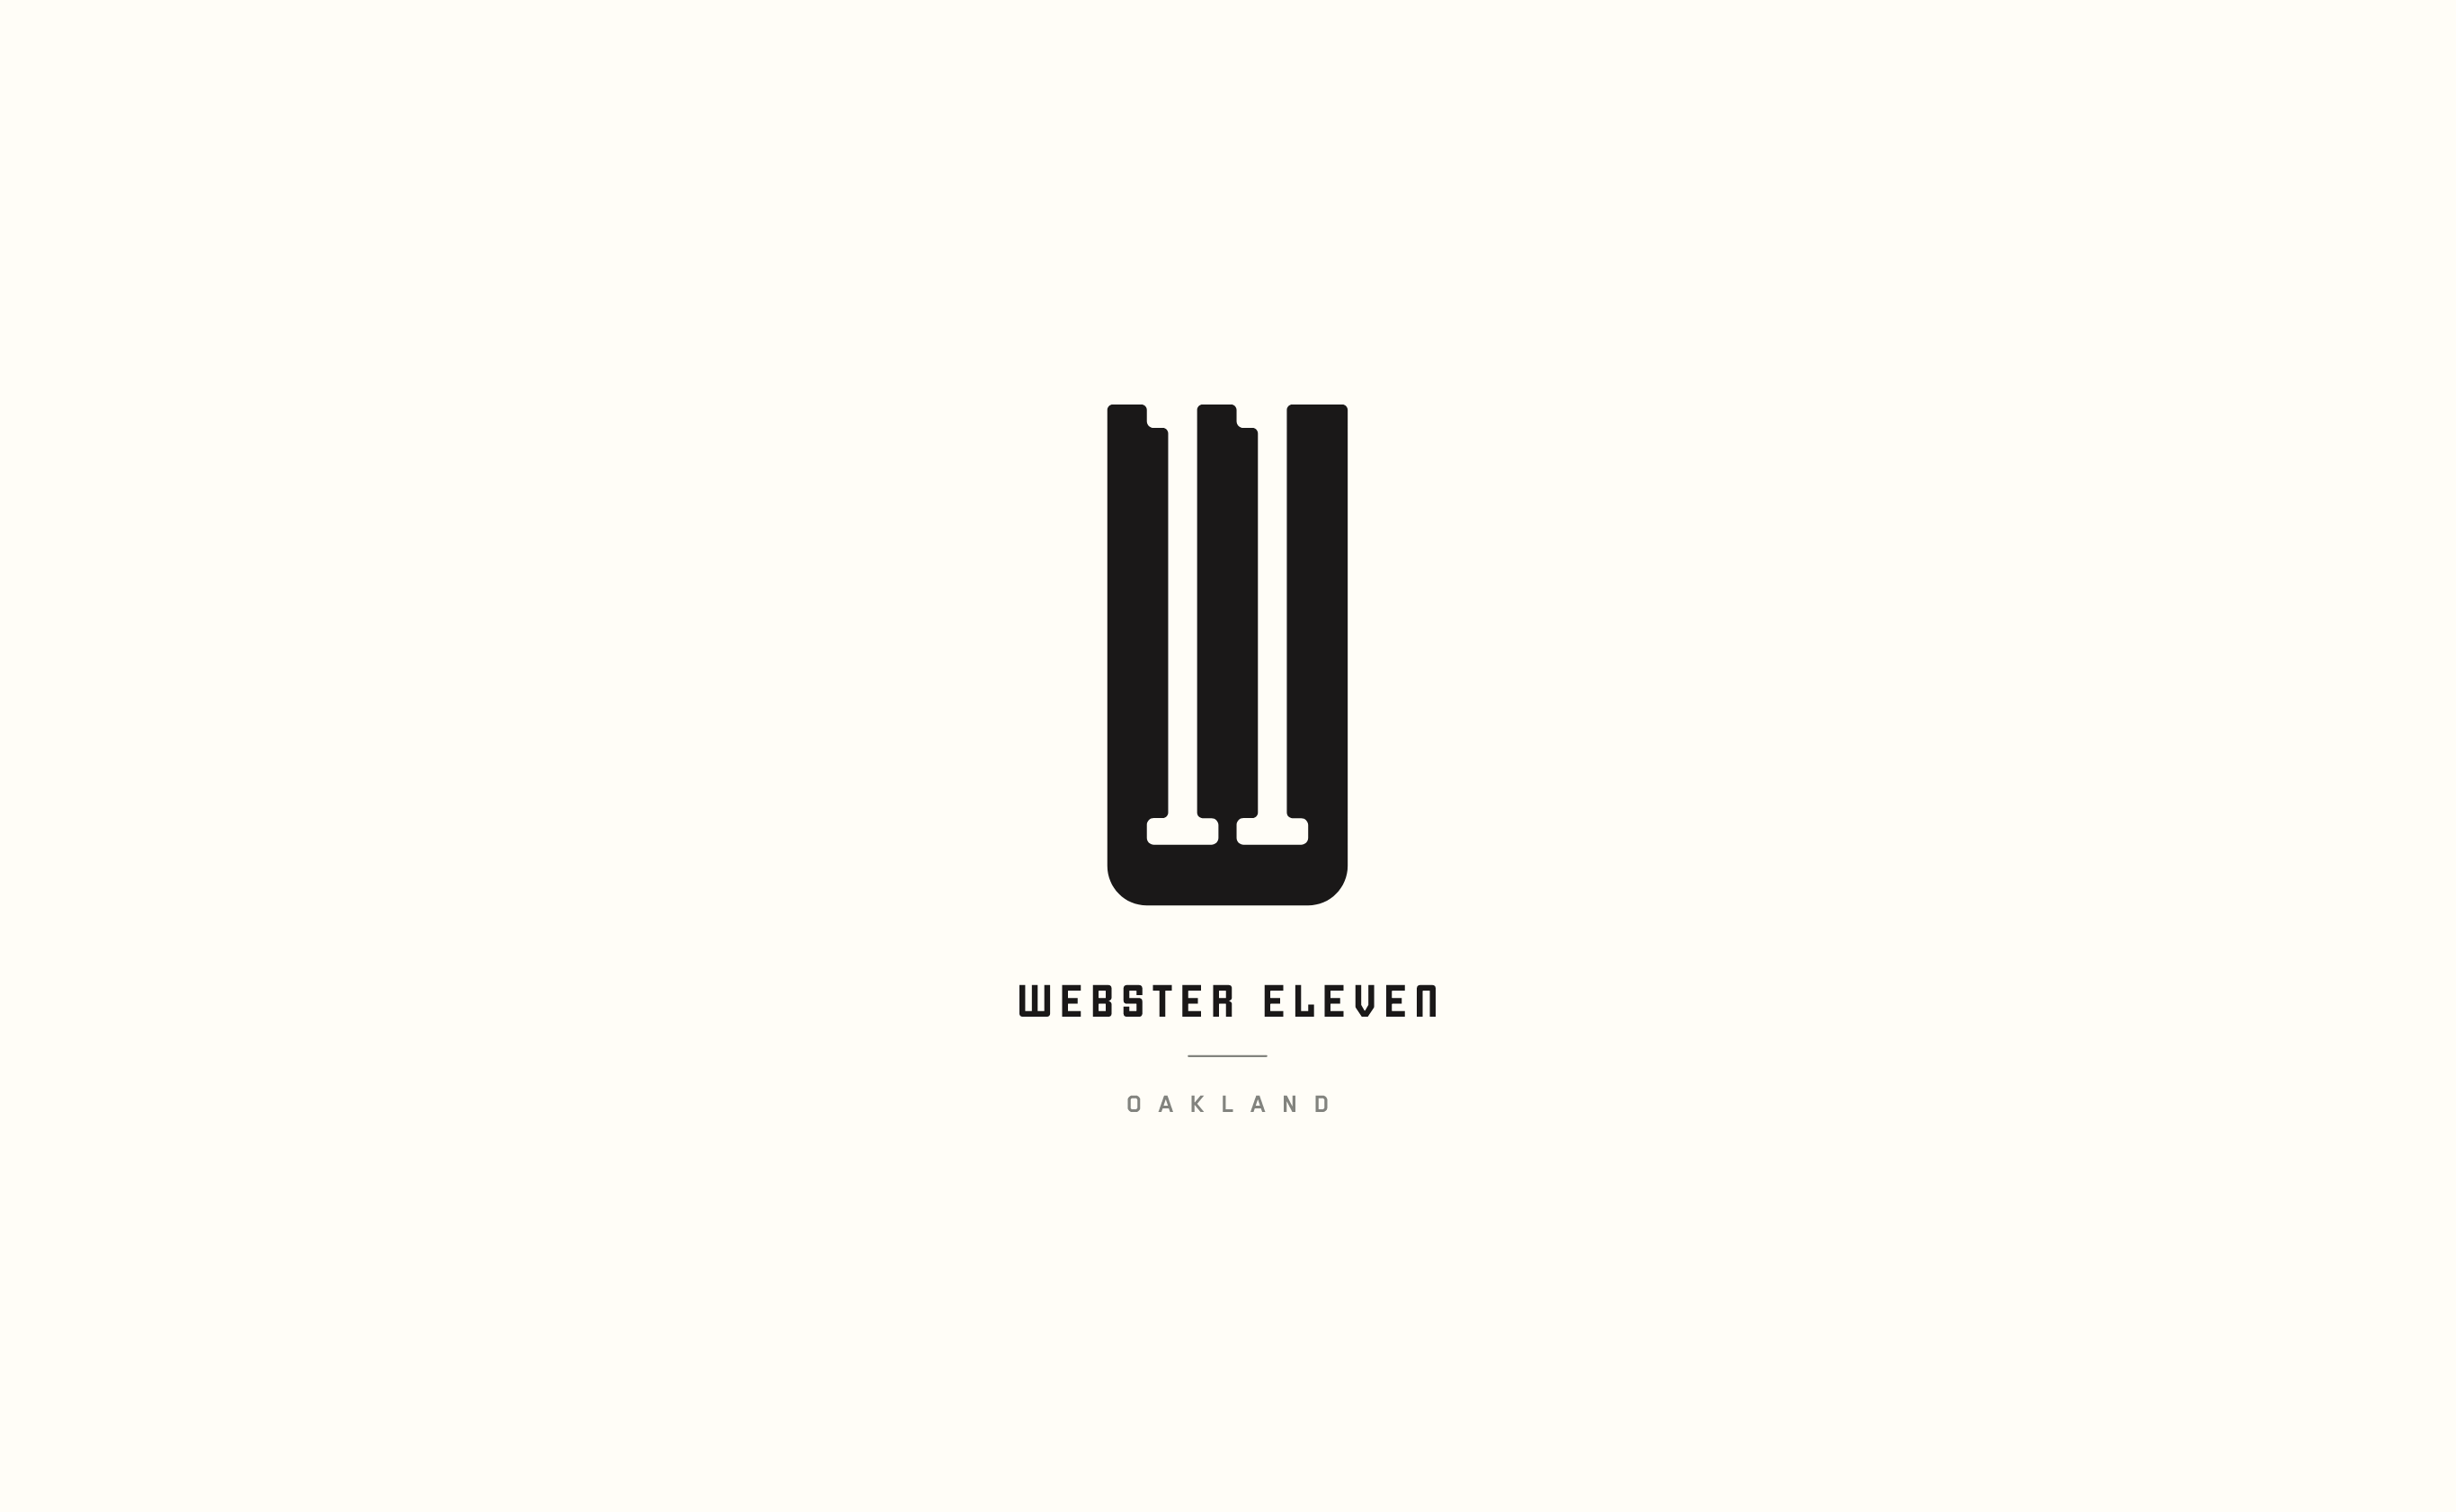 Webster 11 Oakland logo lockup